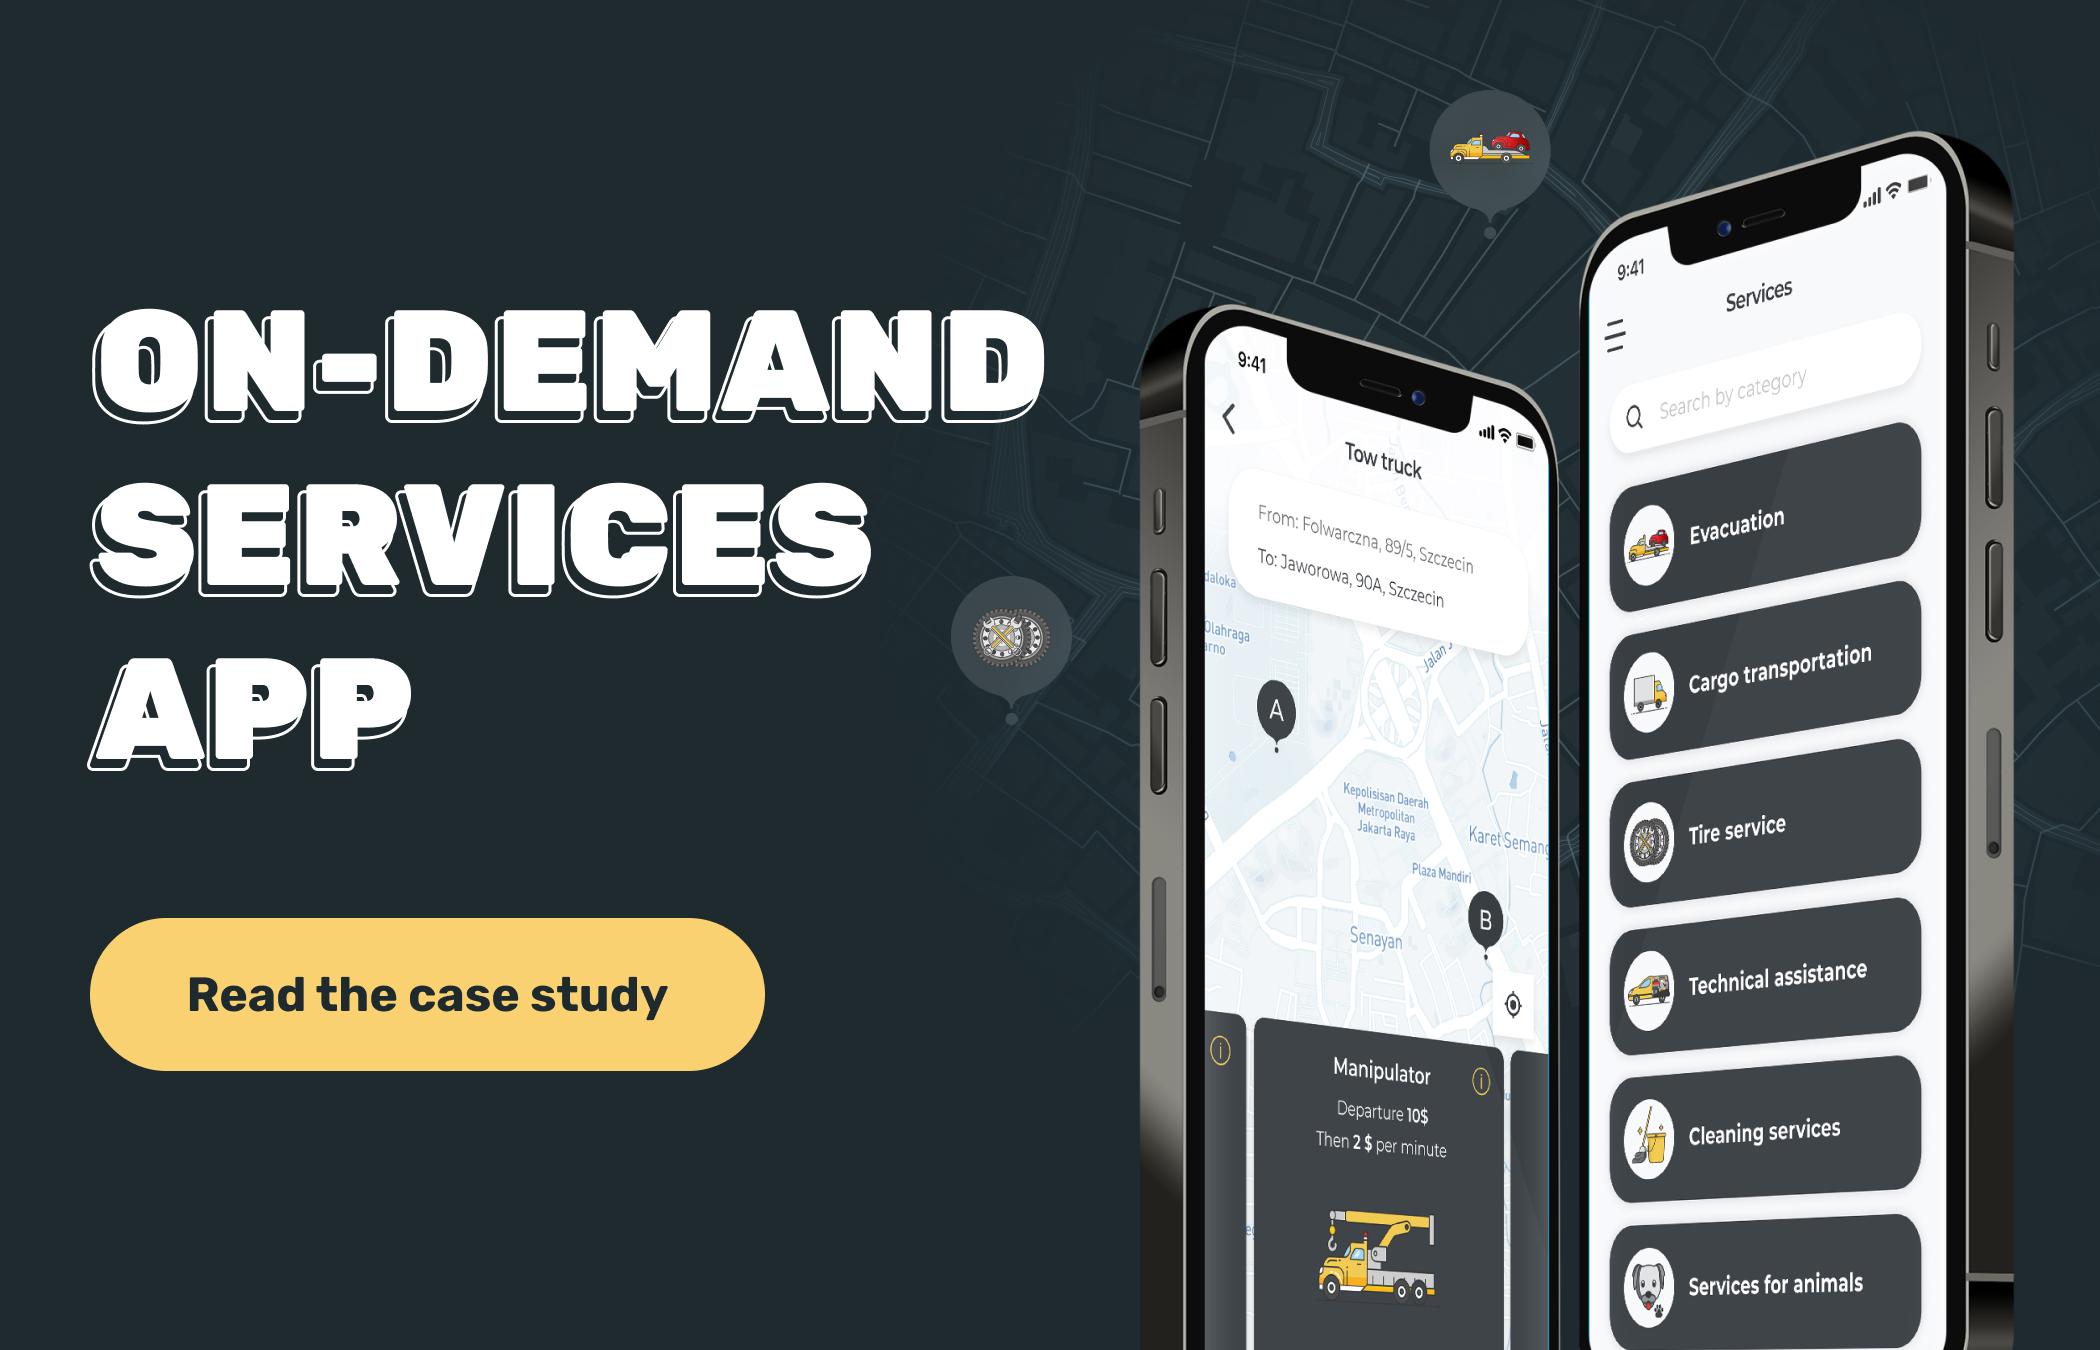 On-demand services app